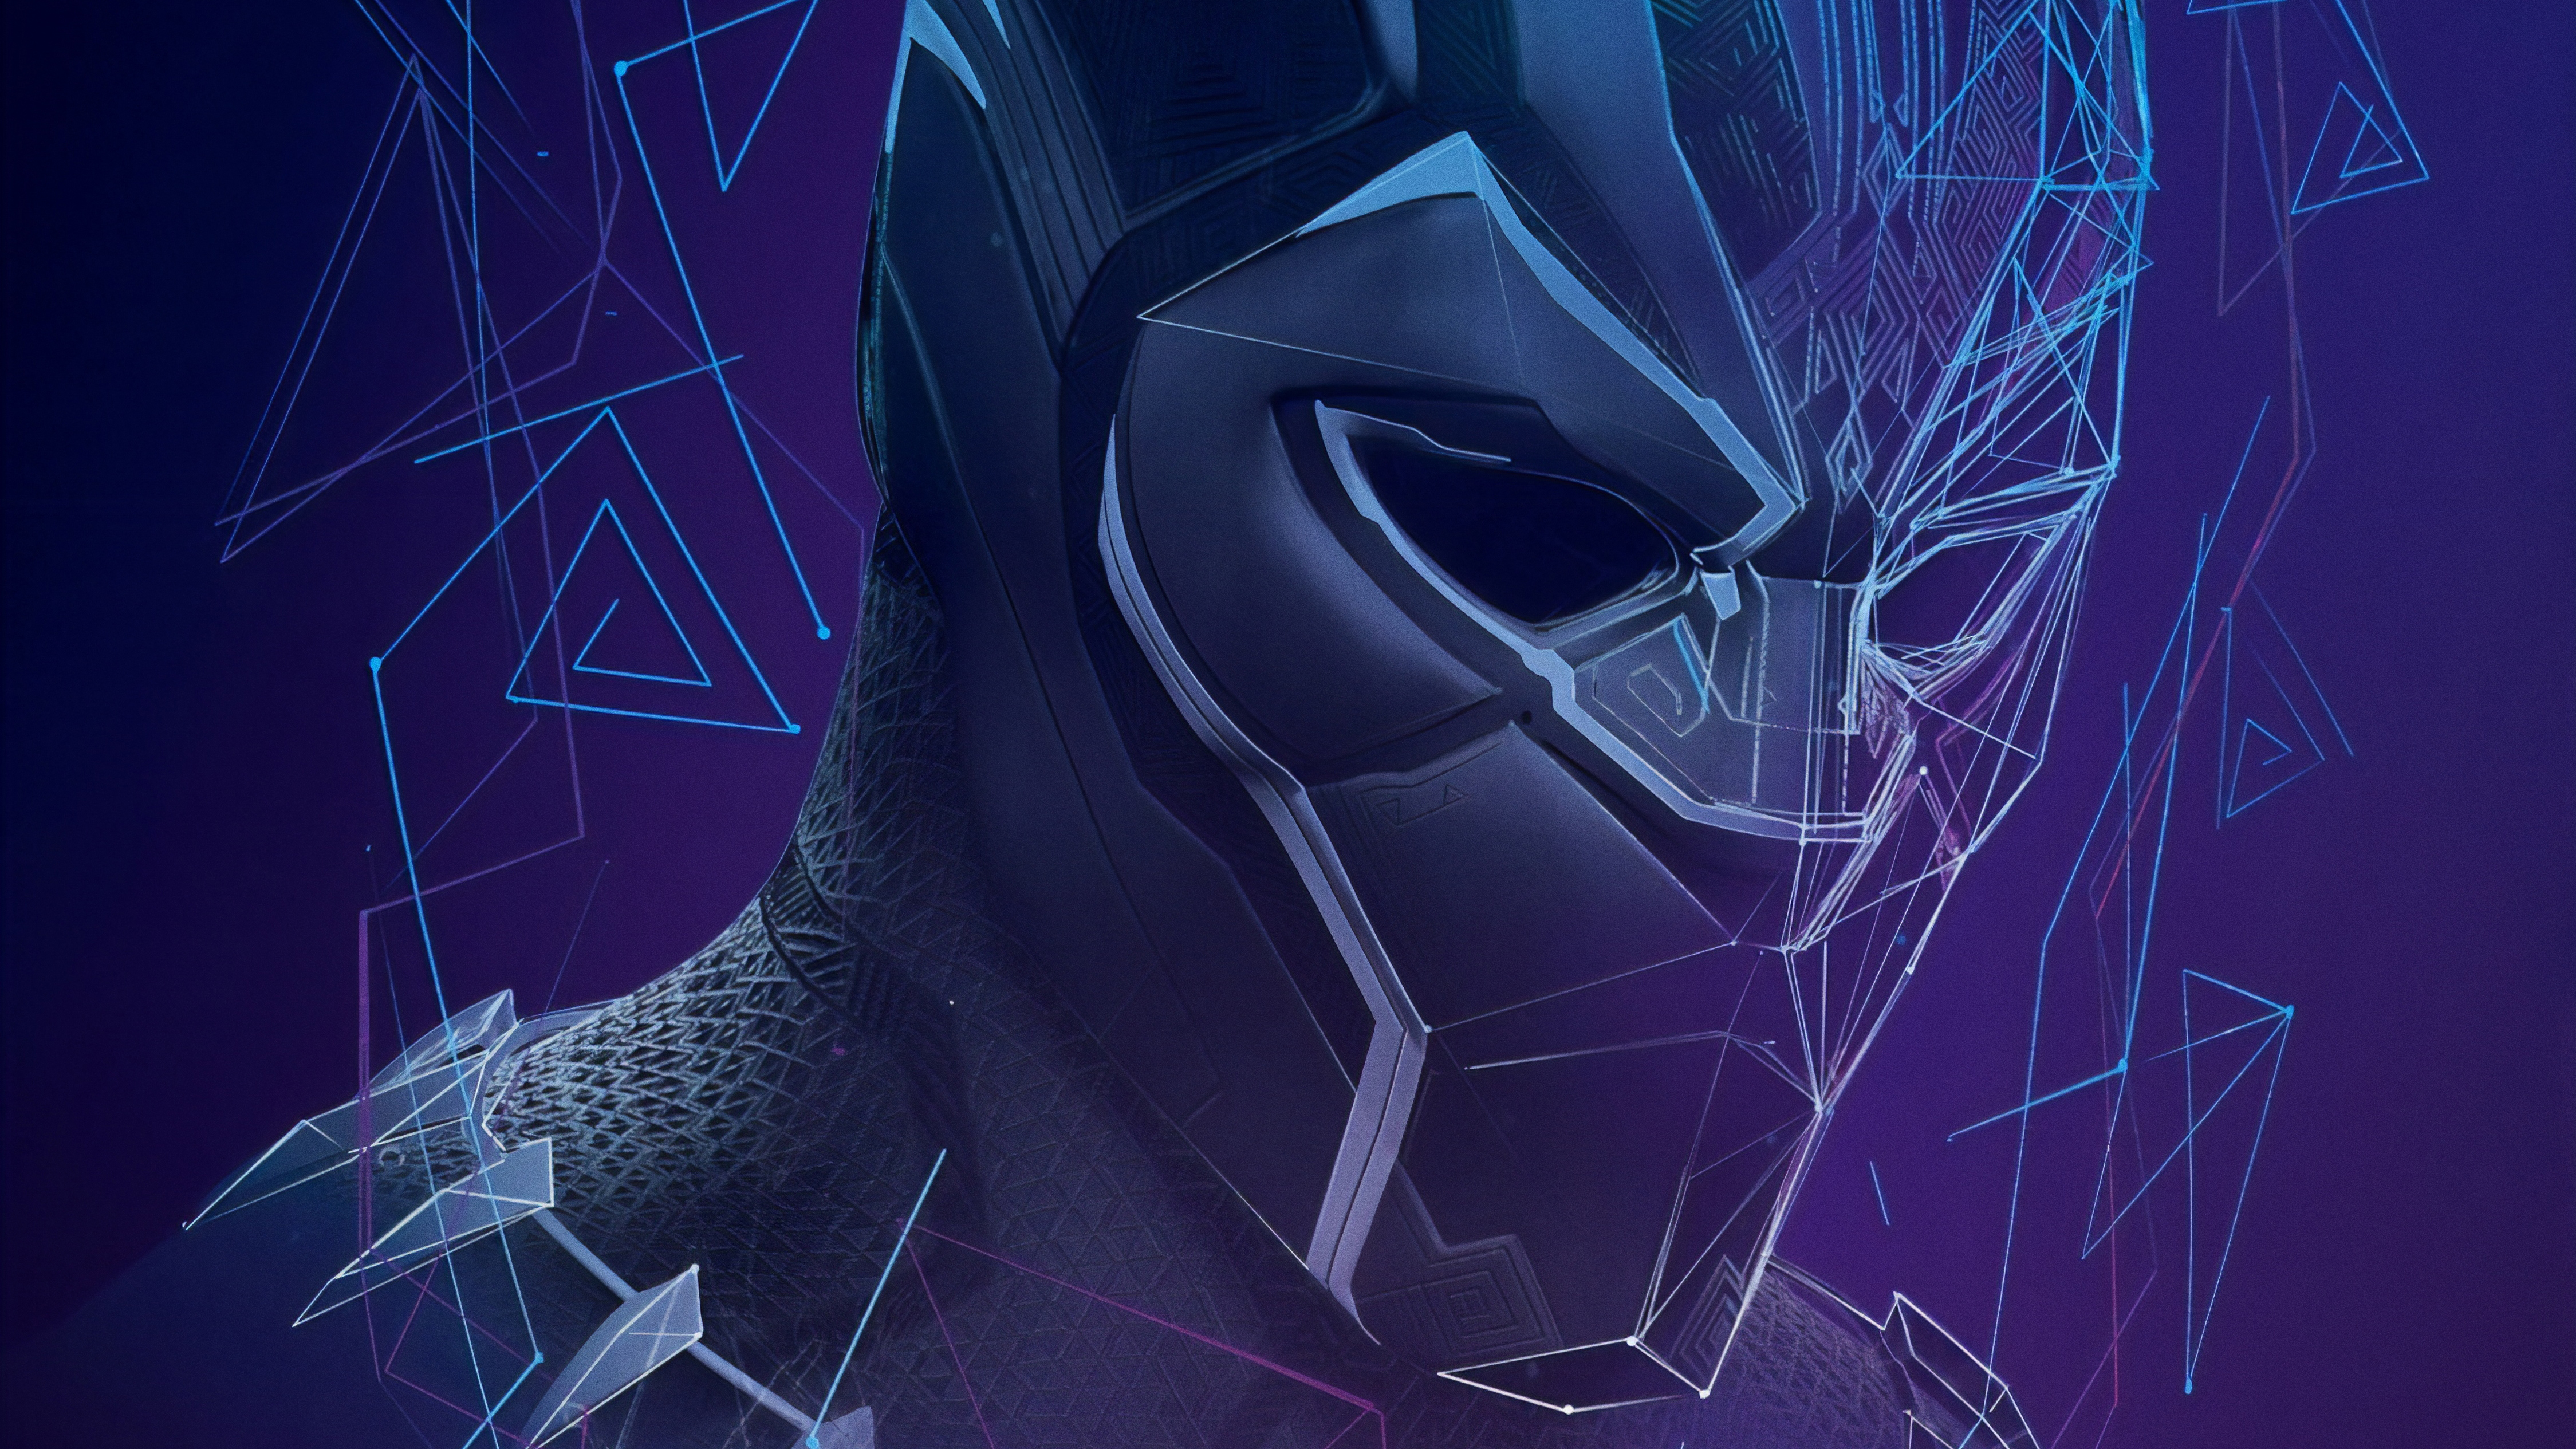 Windows Wallpaper Black Panther (Marvel Comics) 